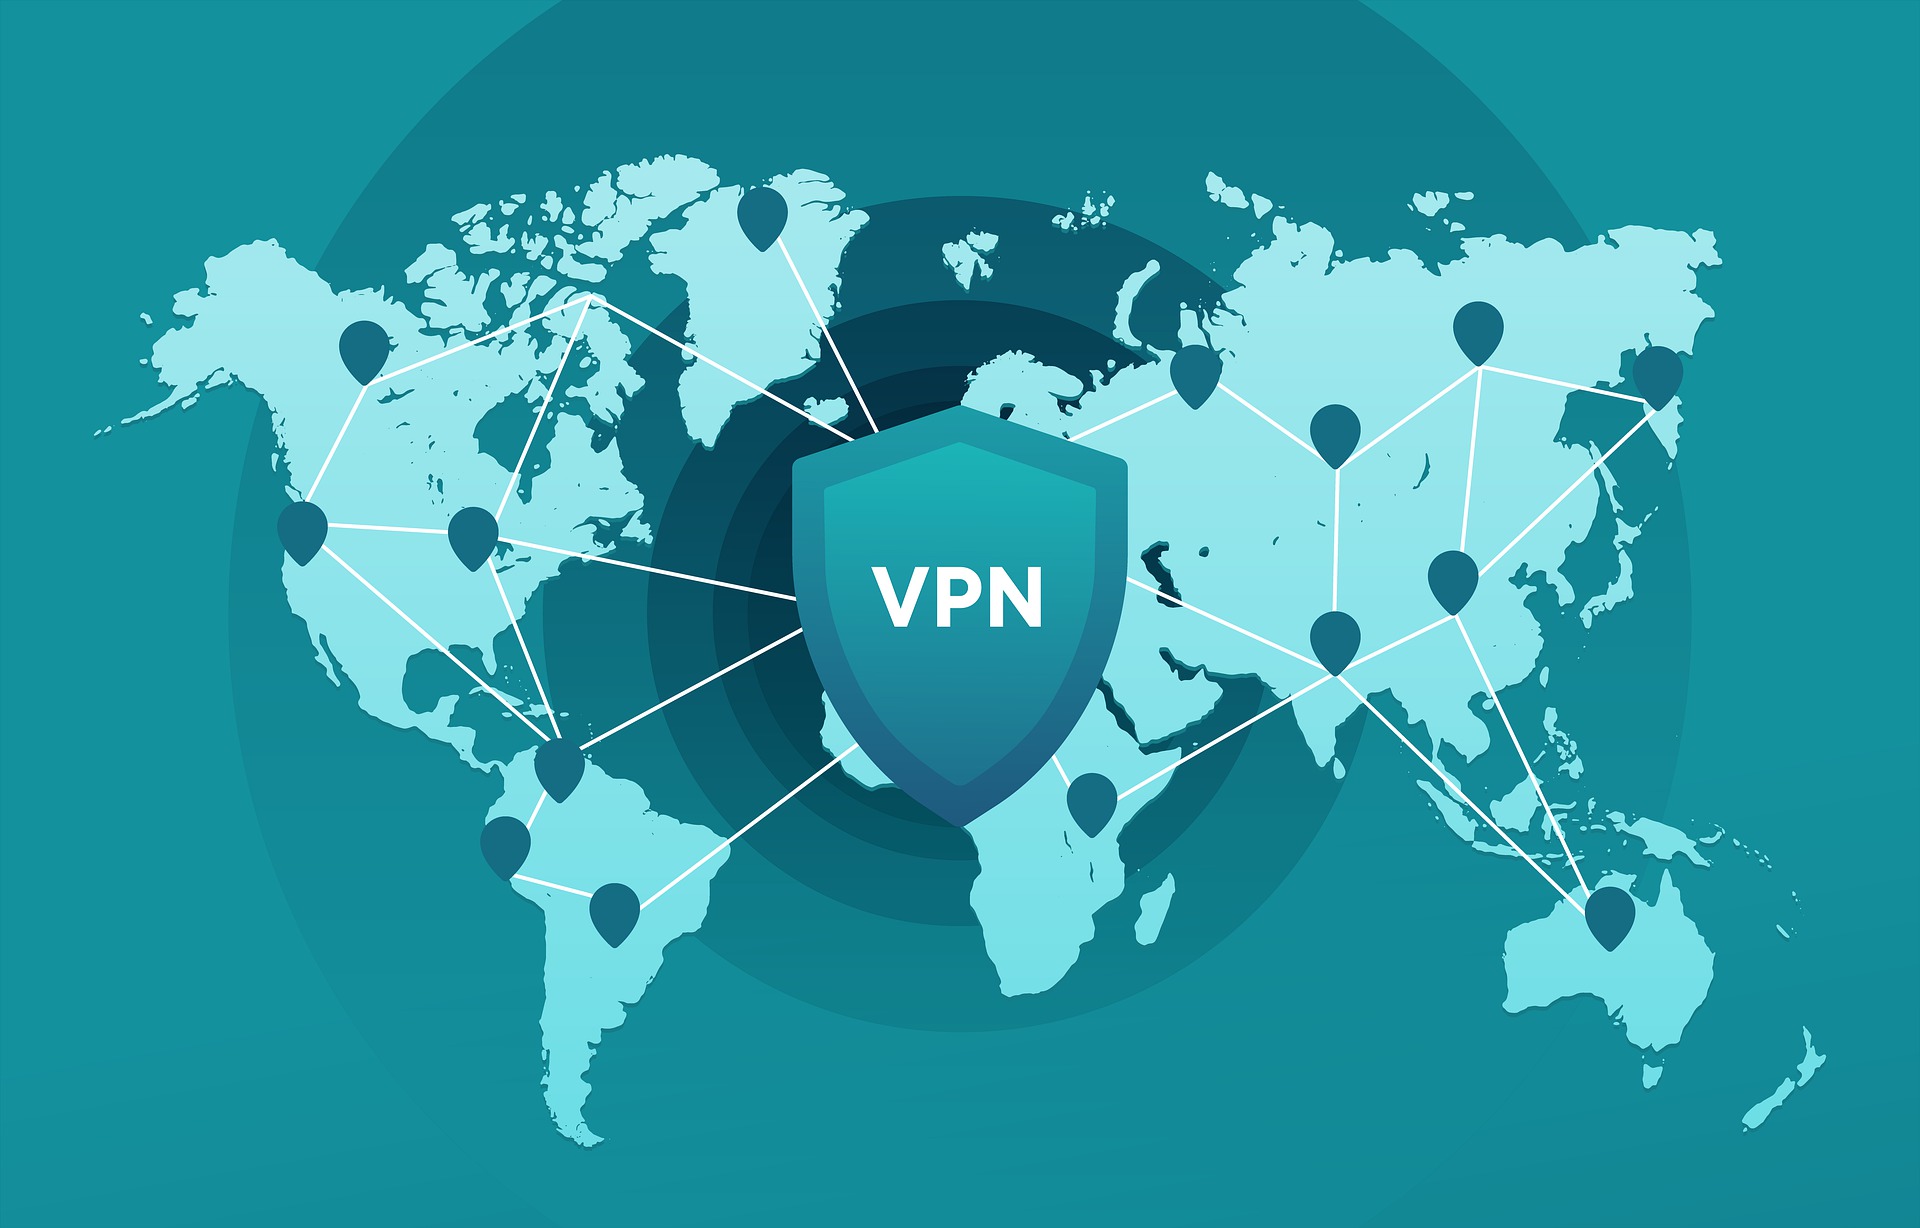 NordVPN Study Shows Alarming Free VPN Trend